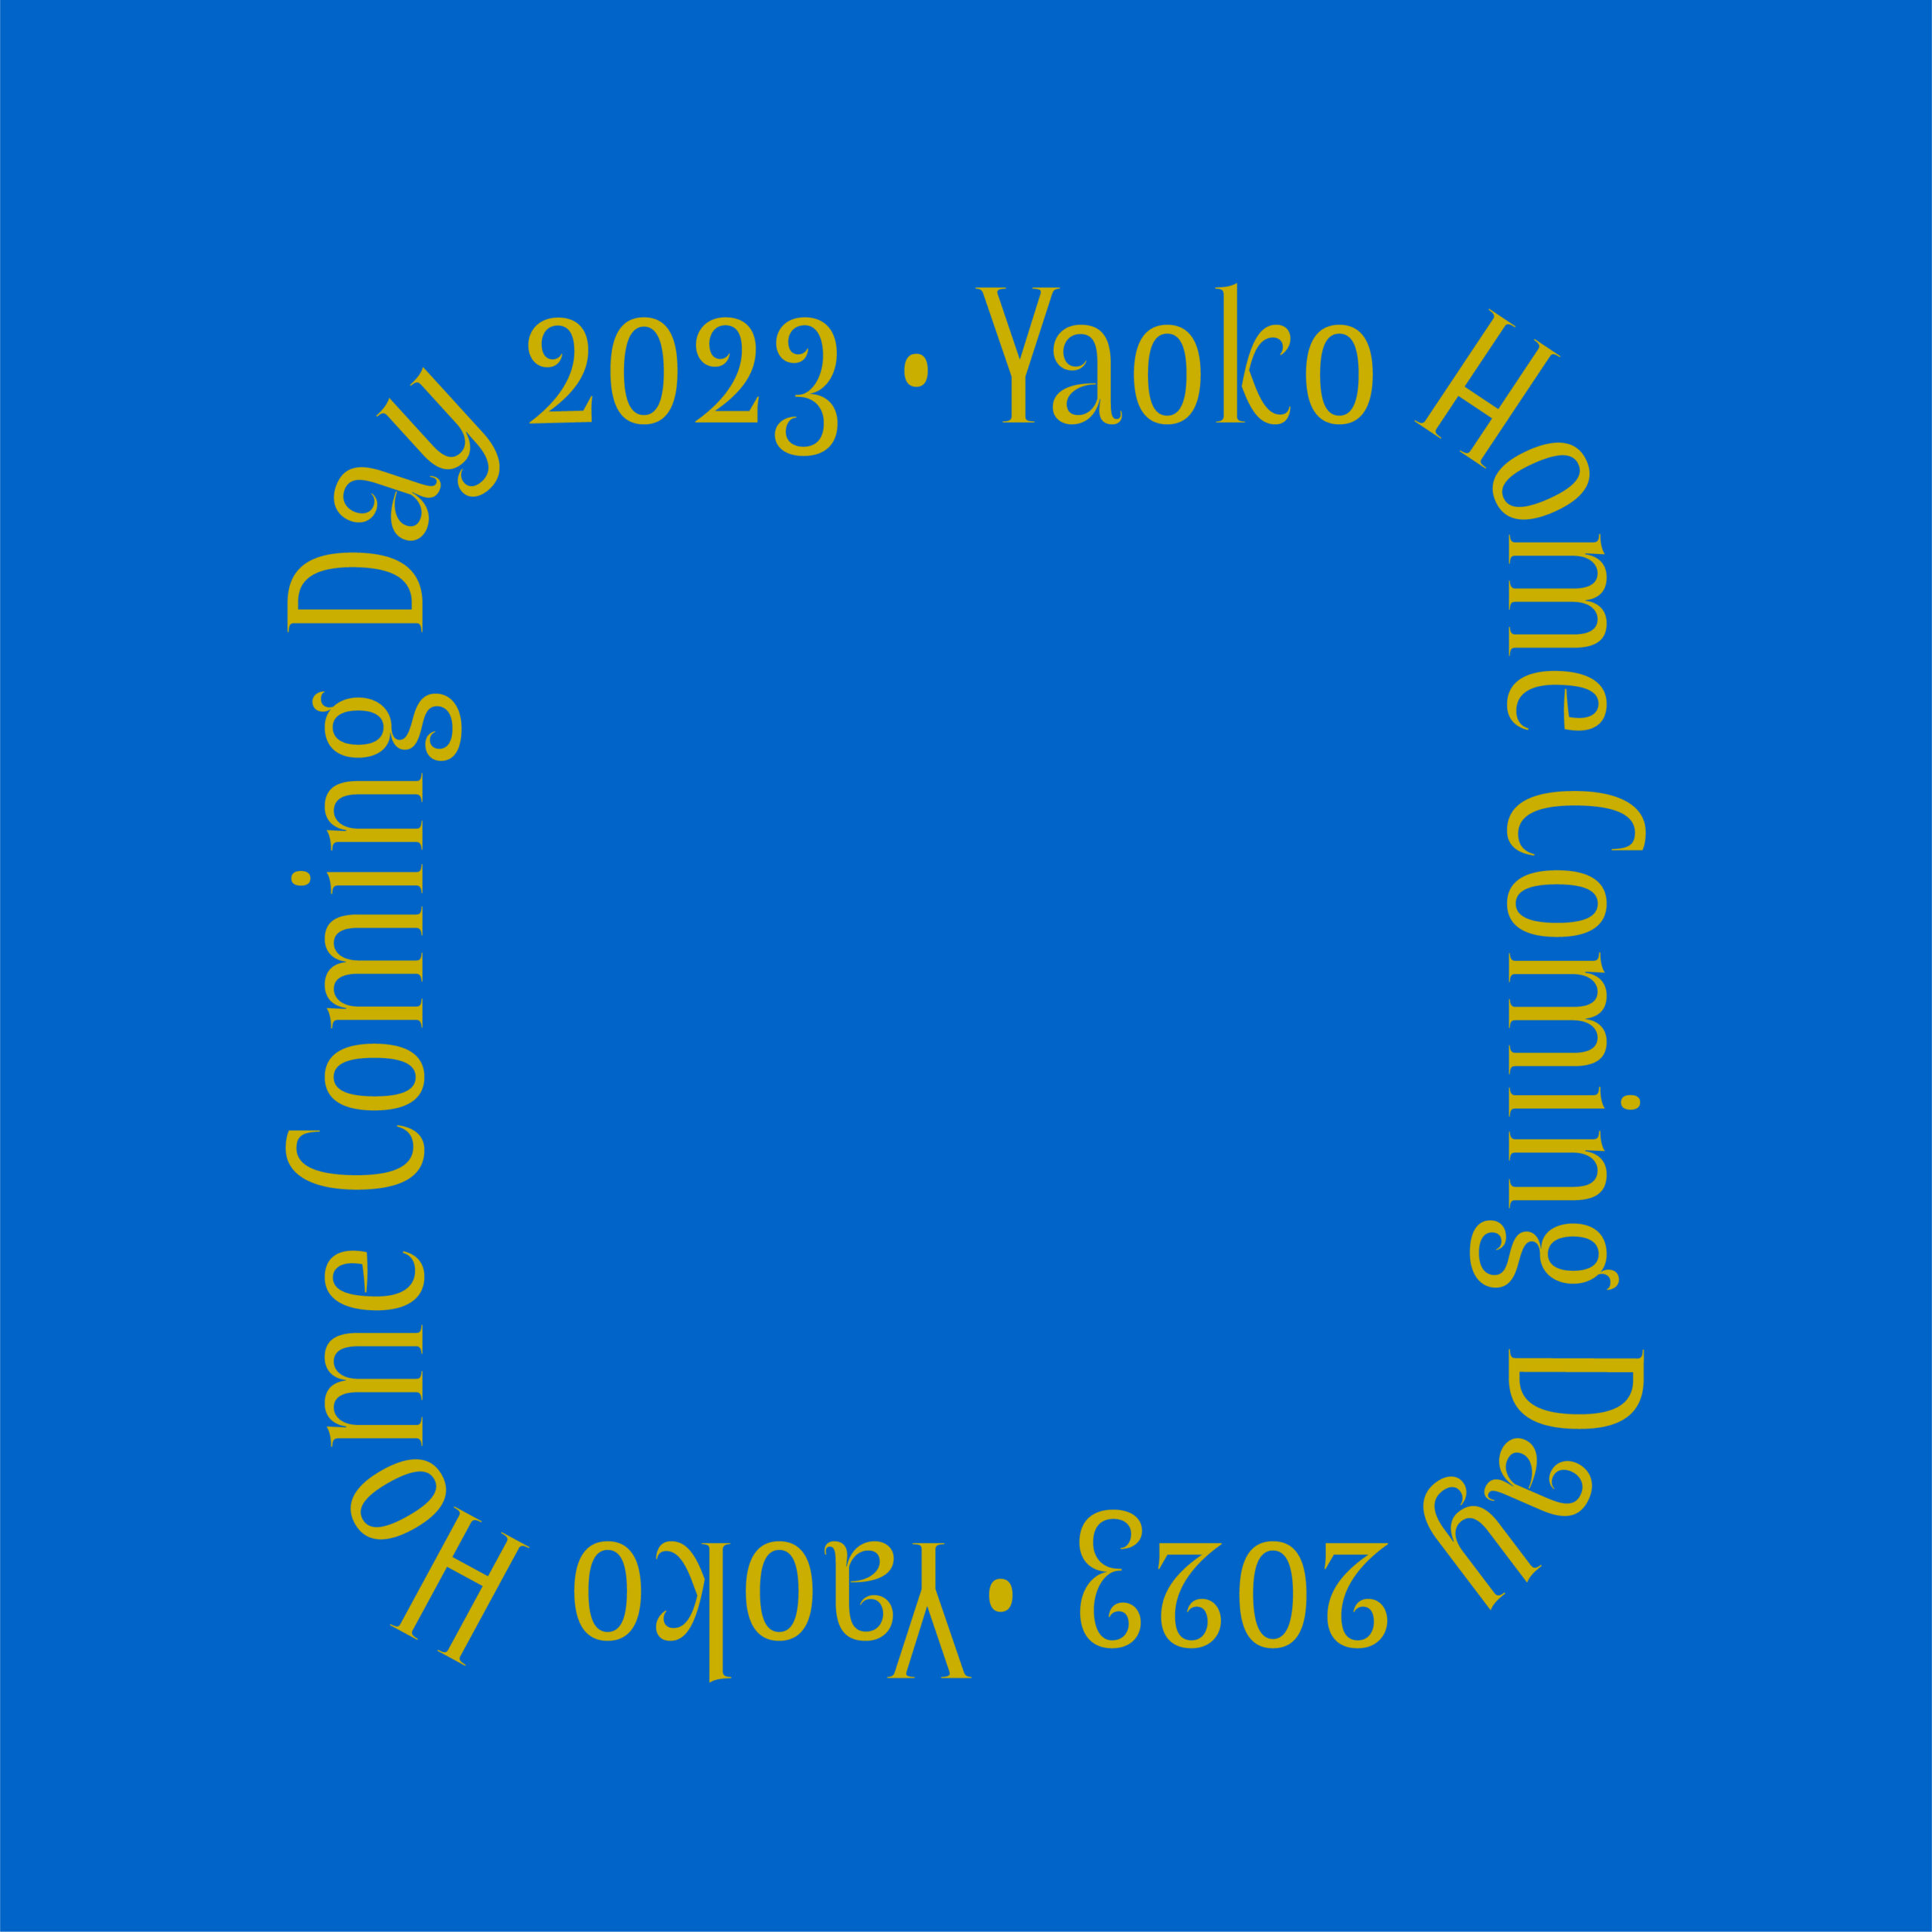 Yaoko Home Coming Day 2023